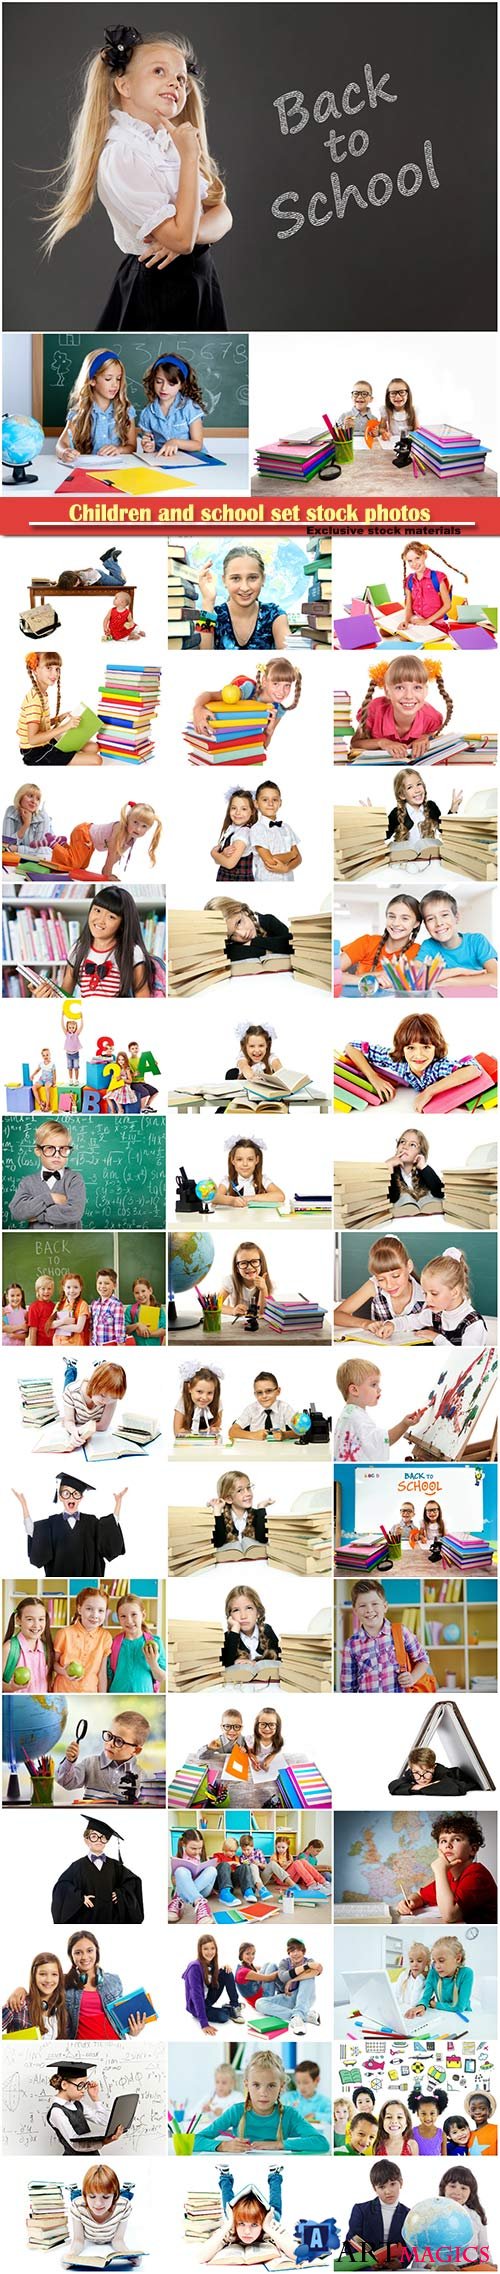 Children and school set stock photos # 2